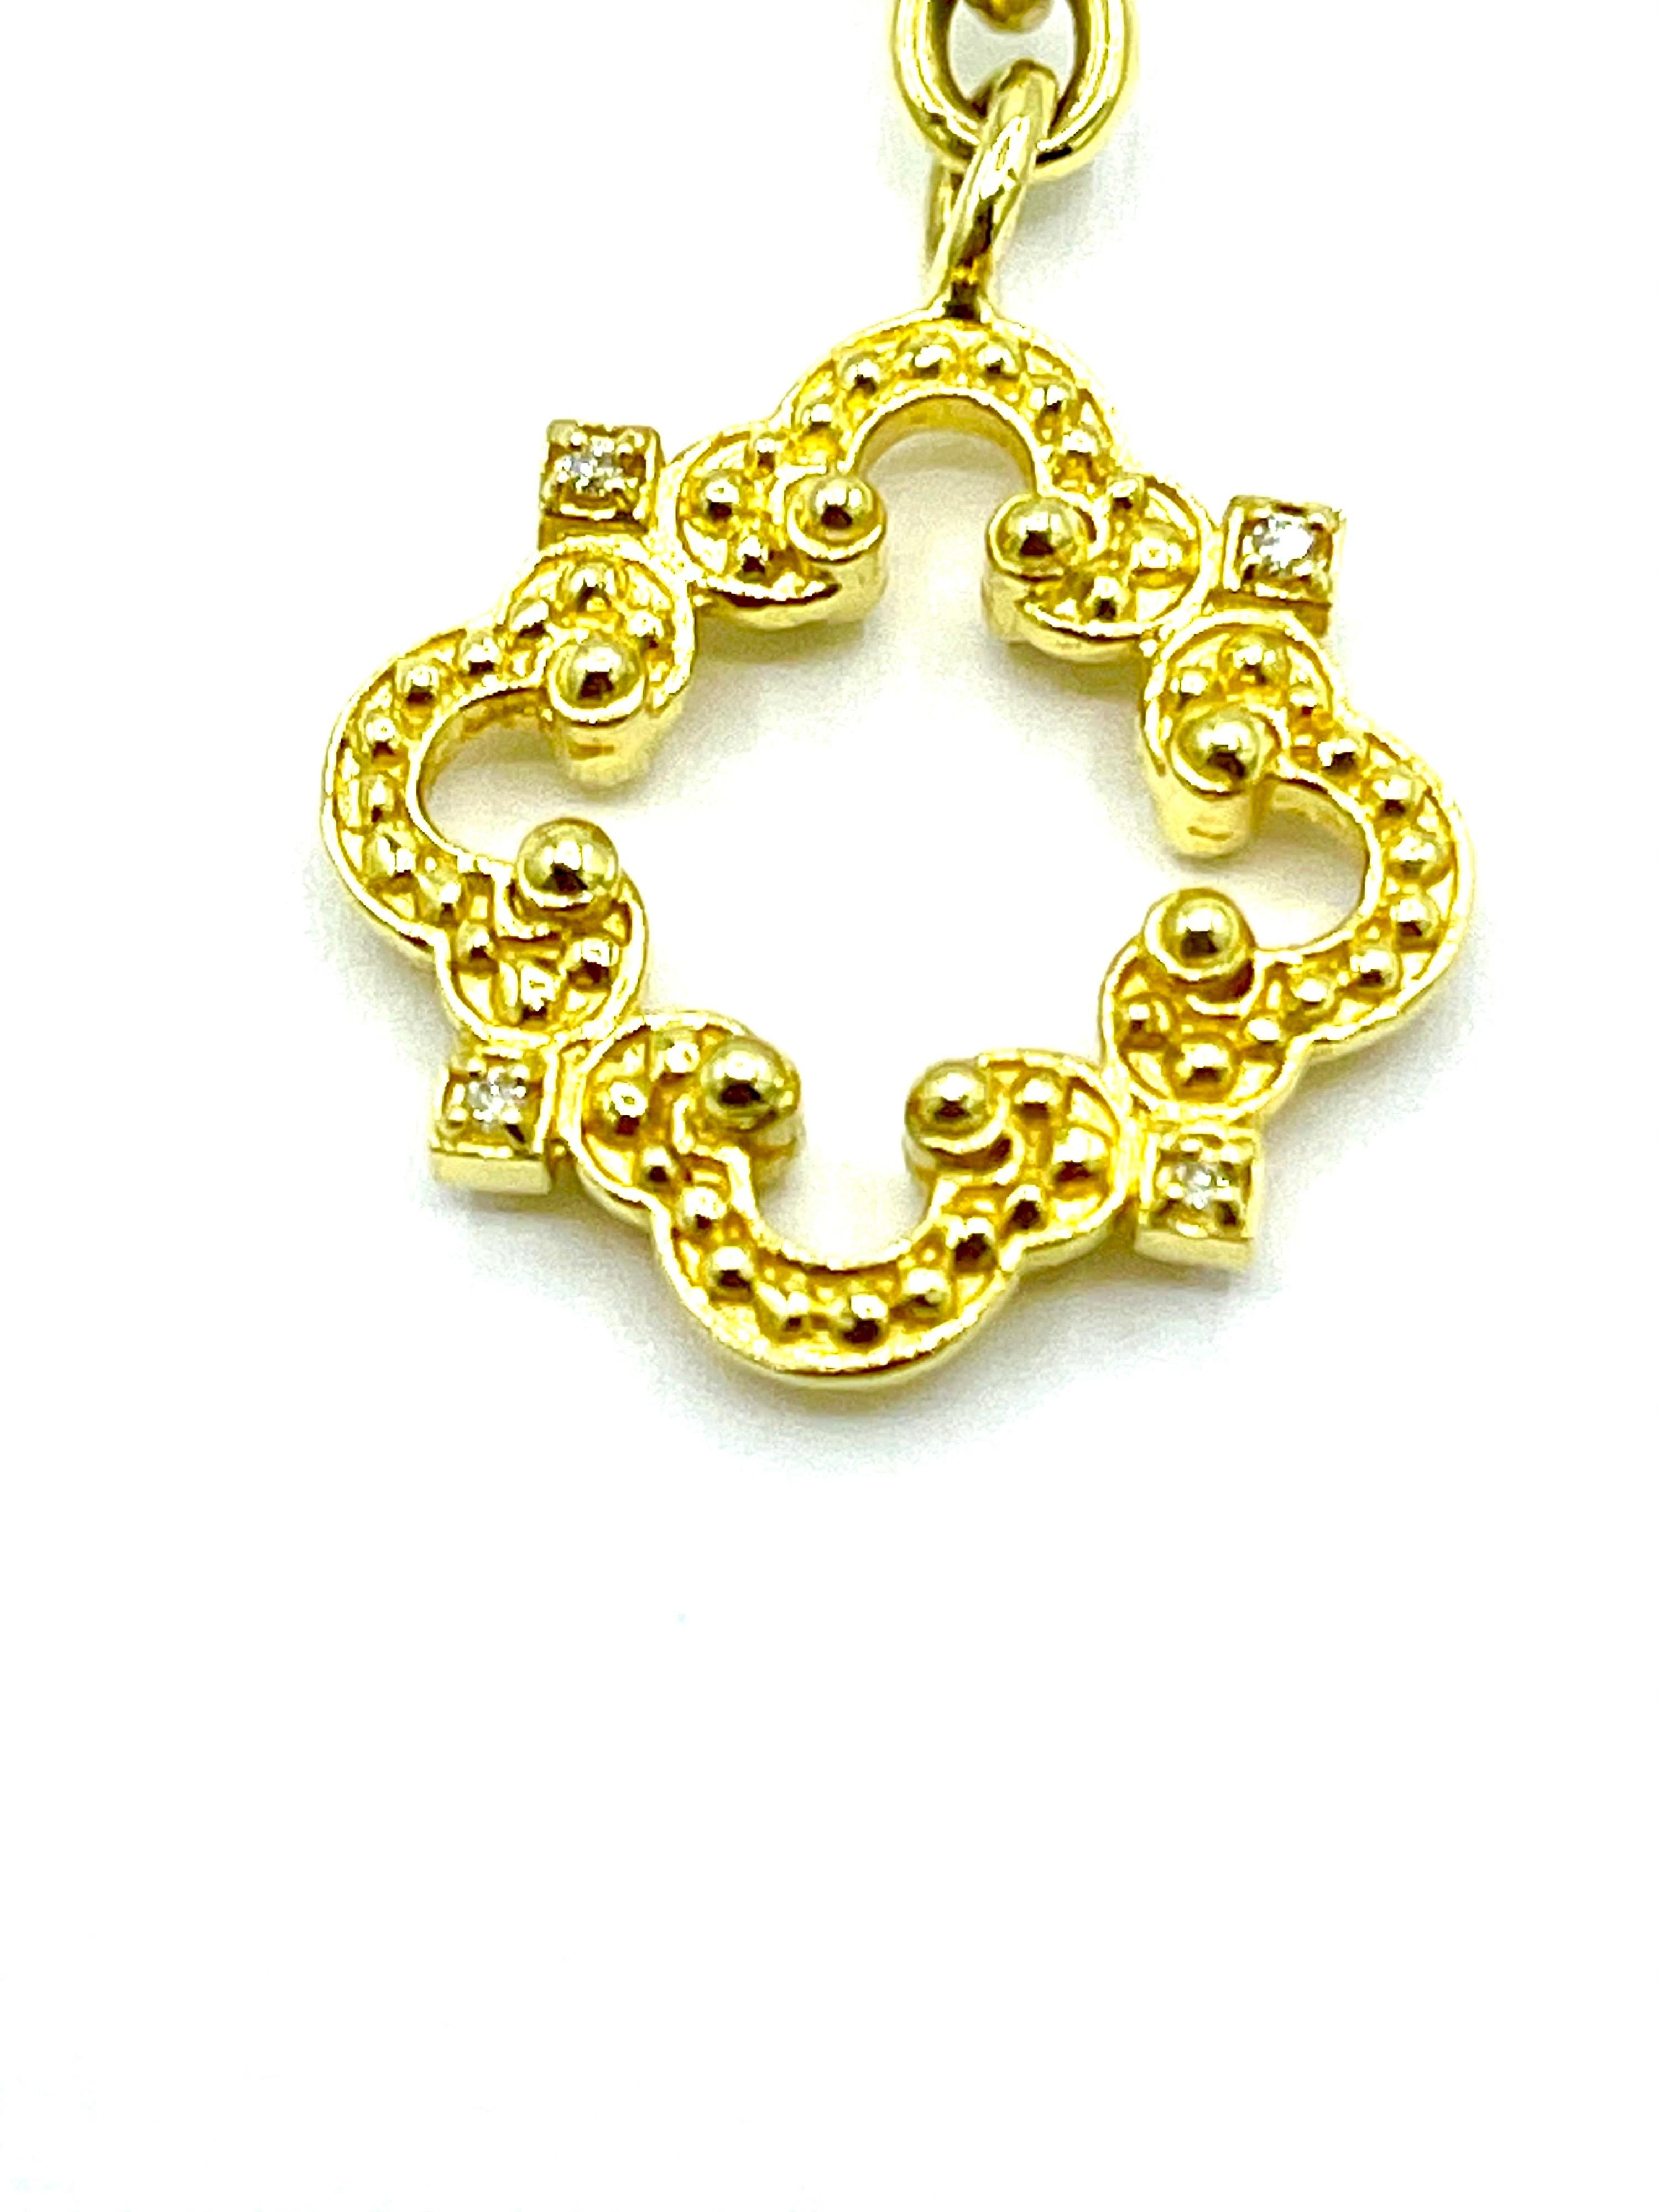 Women's or Men's Tanya Farah Cultured Pearl 18 Karat Yellow Gold Bracelet with Toggle